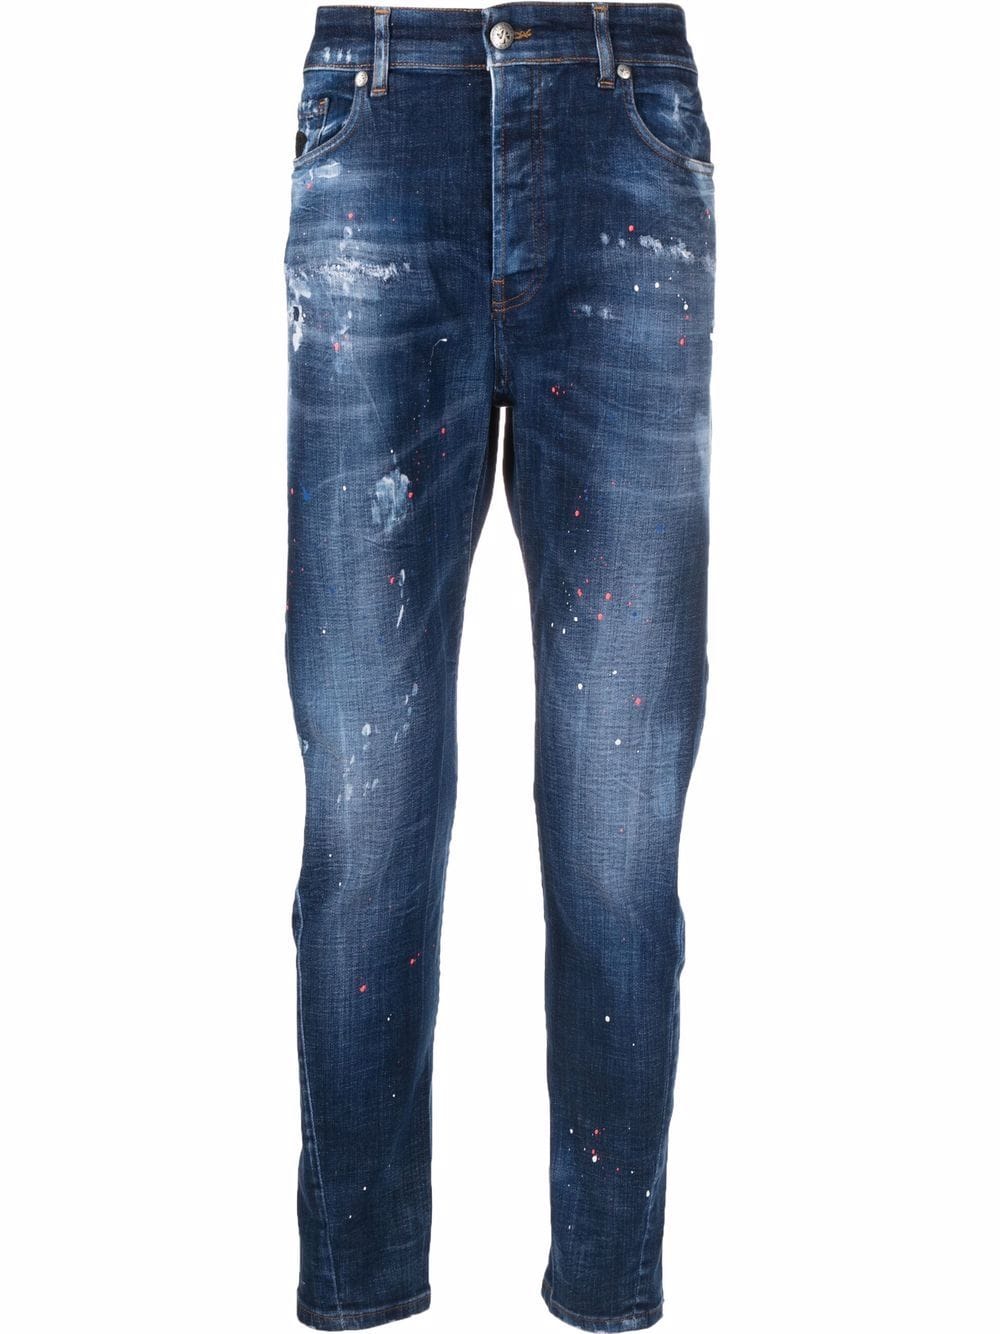 Indigo blue cotton faded-effect denim jeans